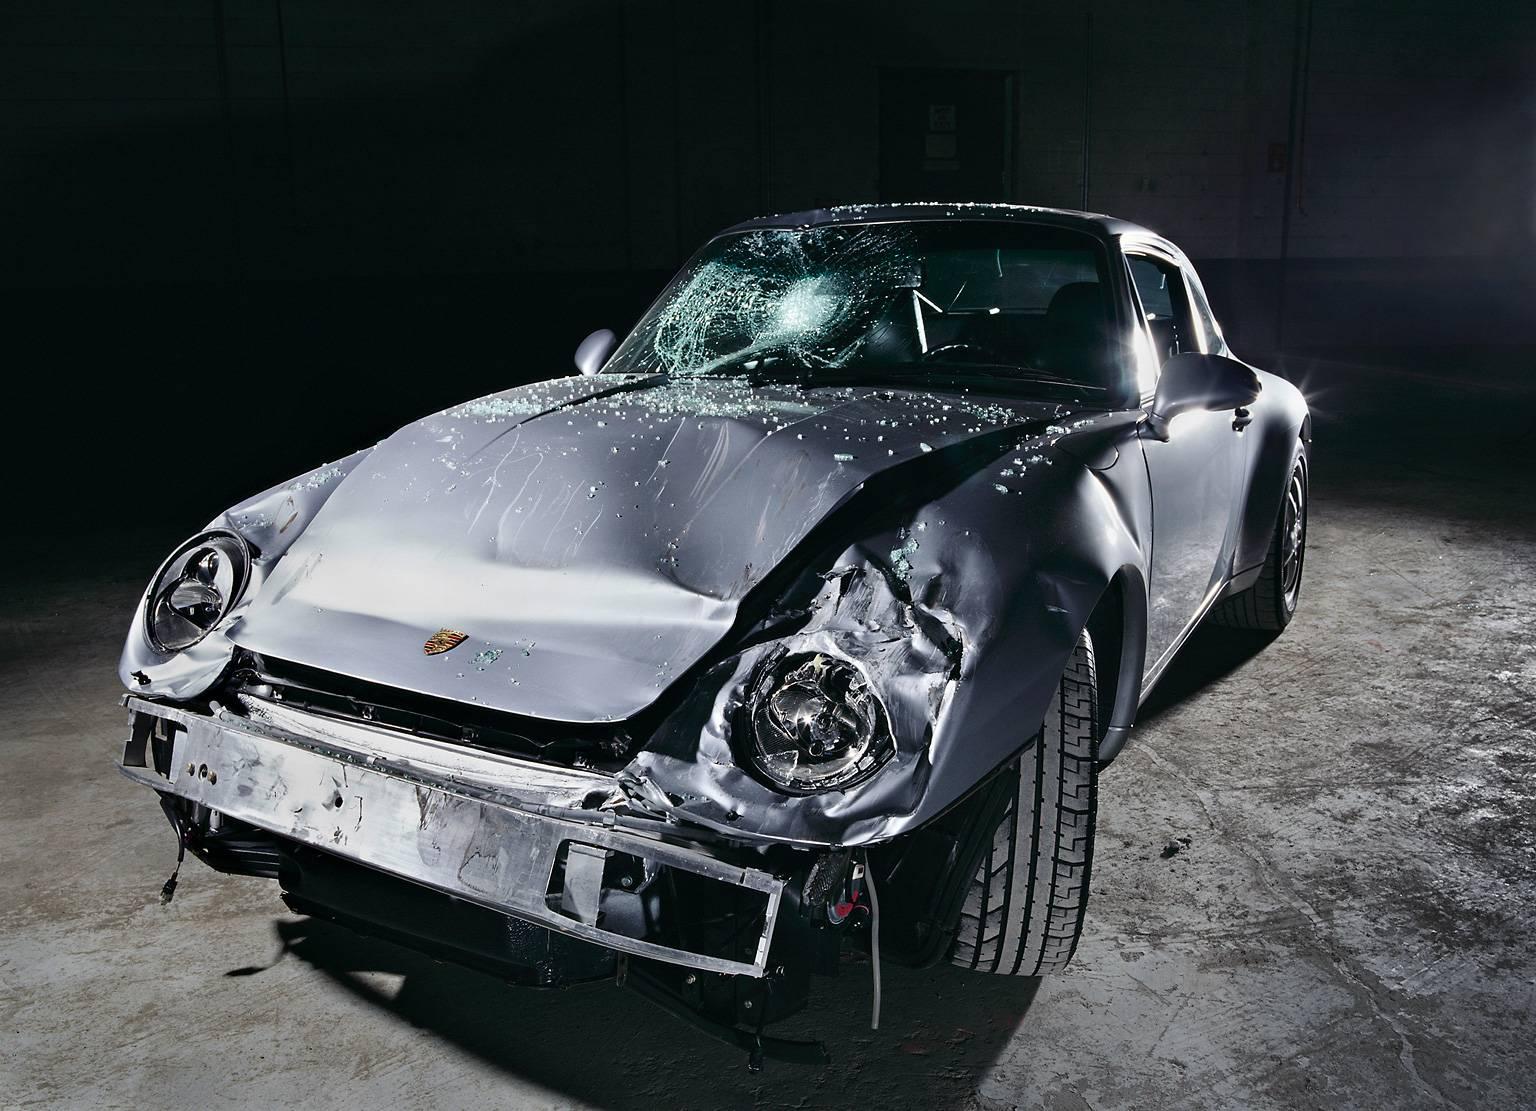 Frank Schott Color Photograph - NINE-ONE-ONE (Porsche 911) - large scale studio photograph of crashed automobile